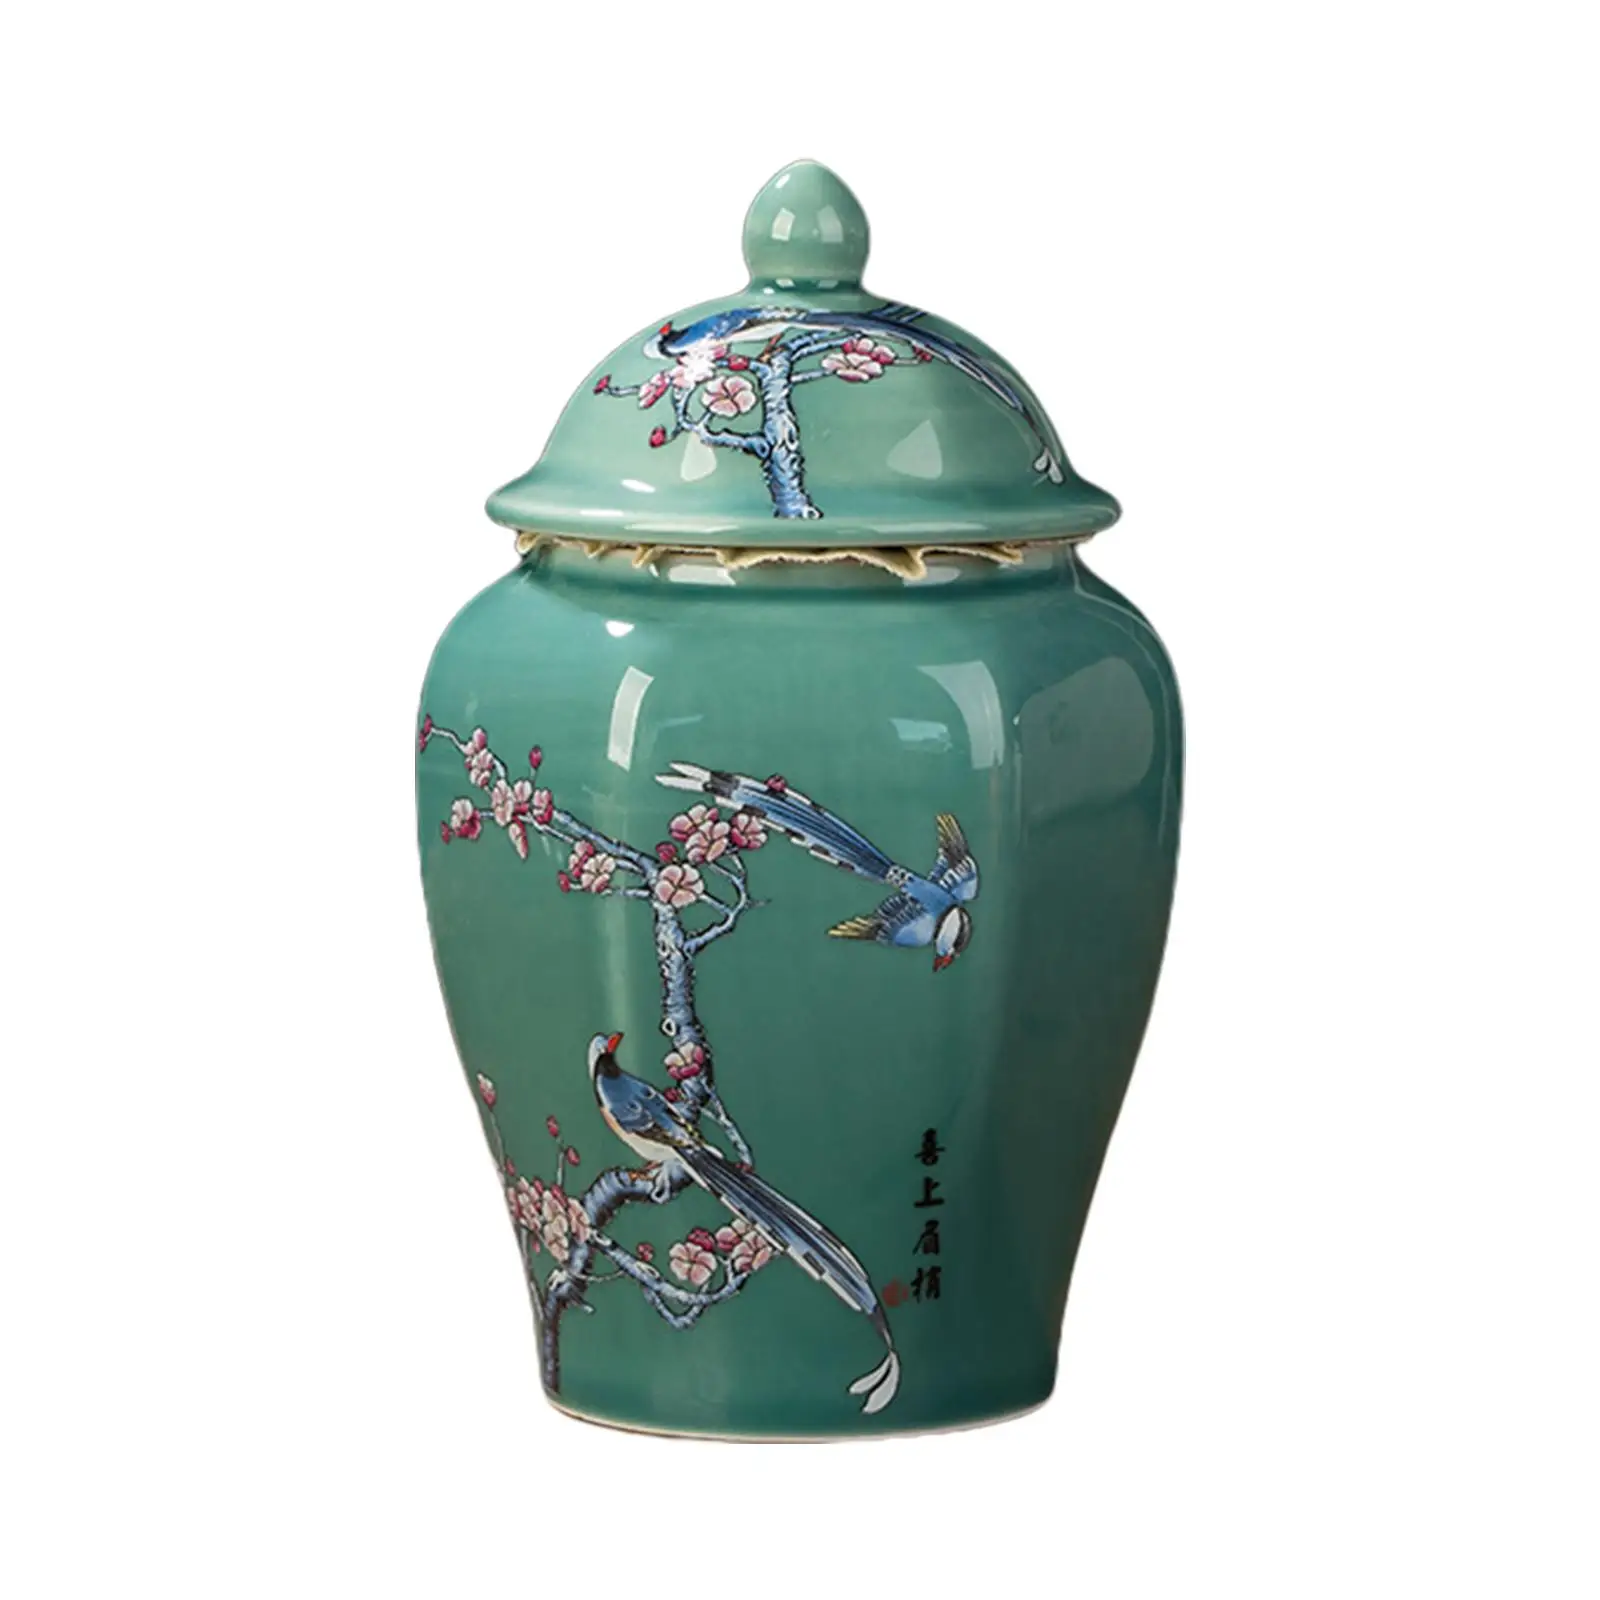 Ceramic Ginger Jar Crafts Gift Vintage Style Traditional Vase Porcelain Jars for Countertop Home Decor Weddings Home Office